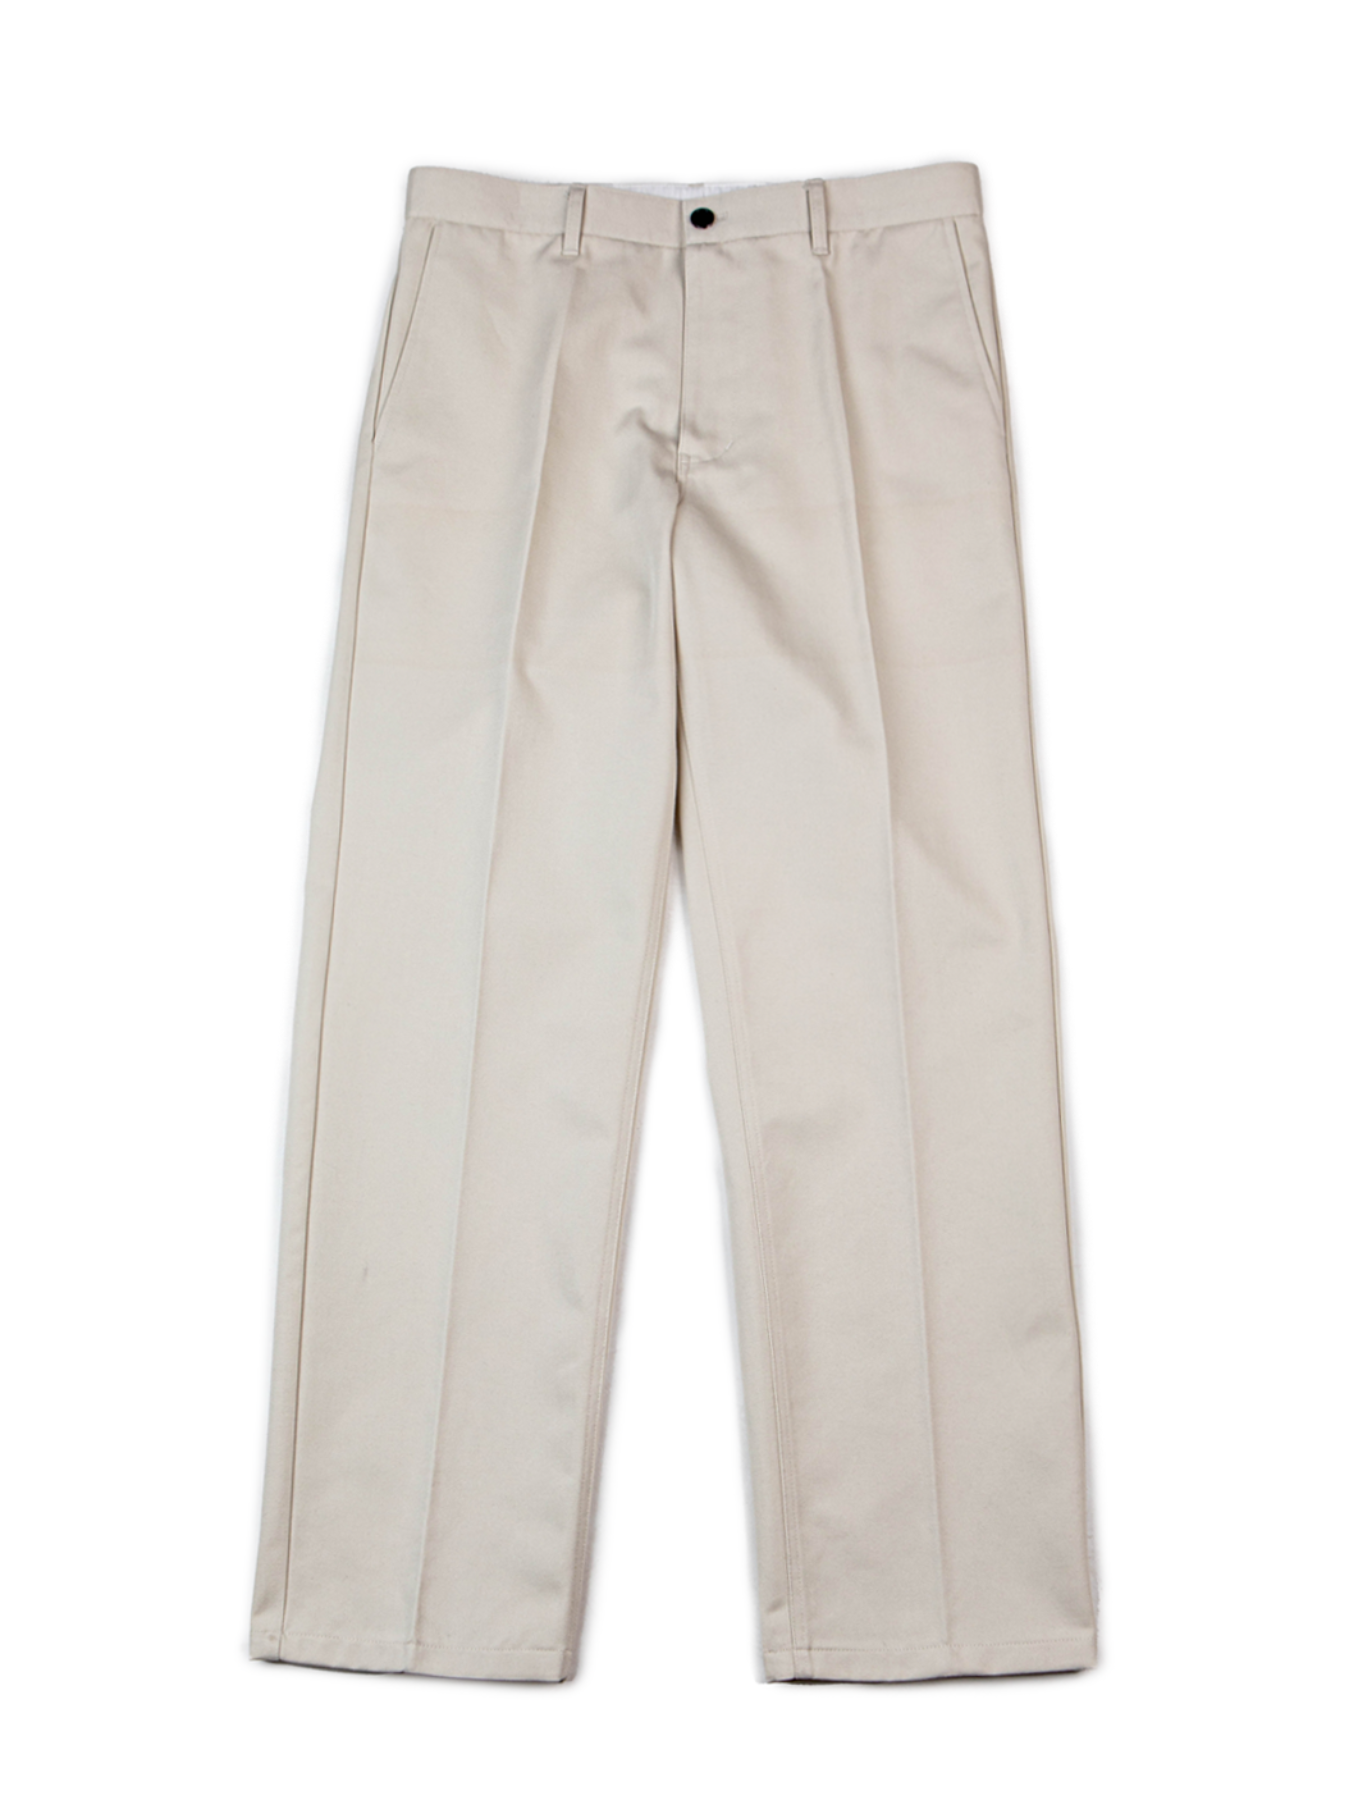 Symmetric tapered pants #13 [beige]